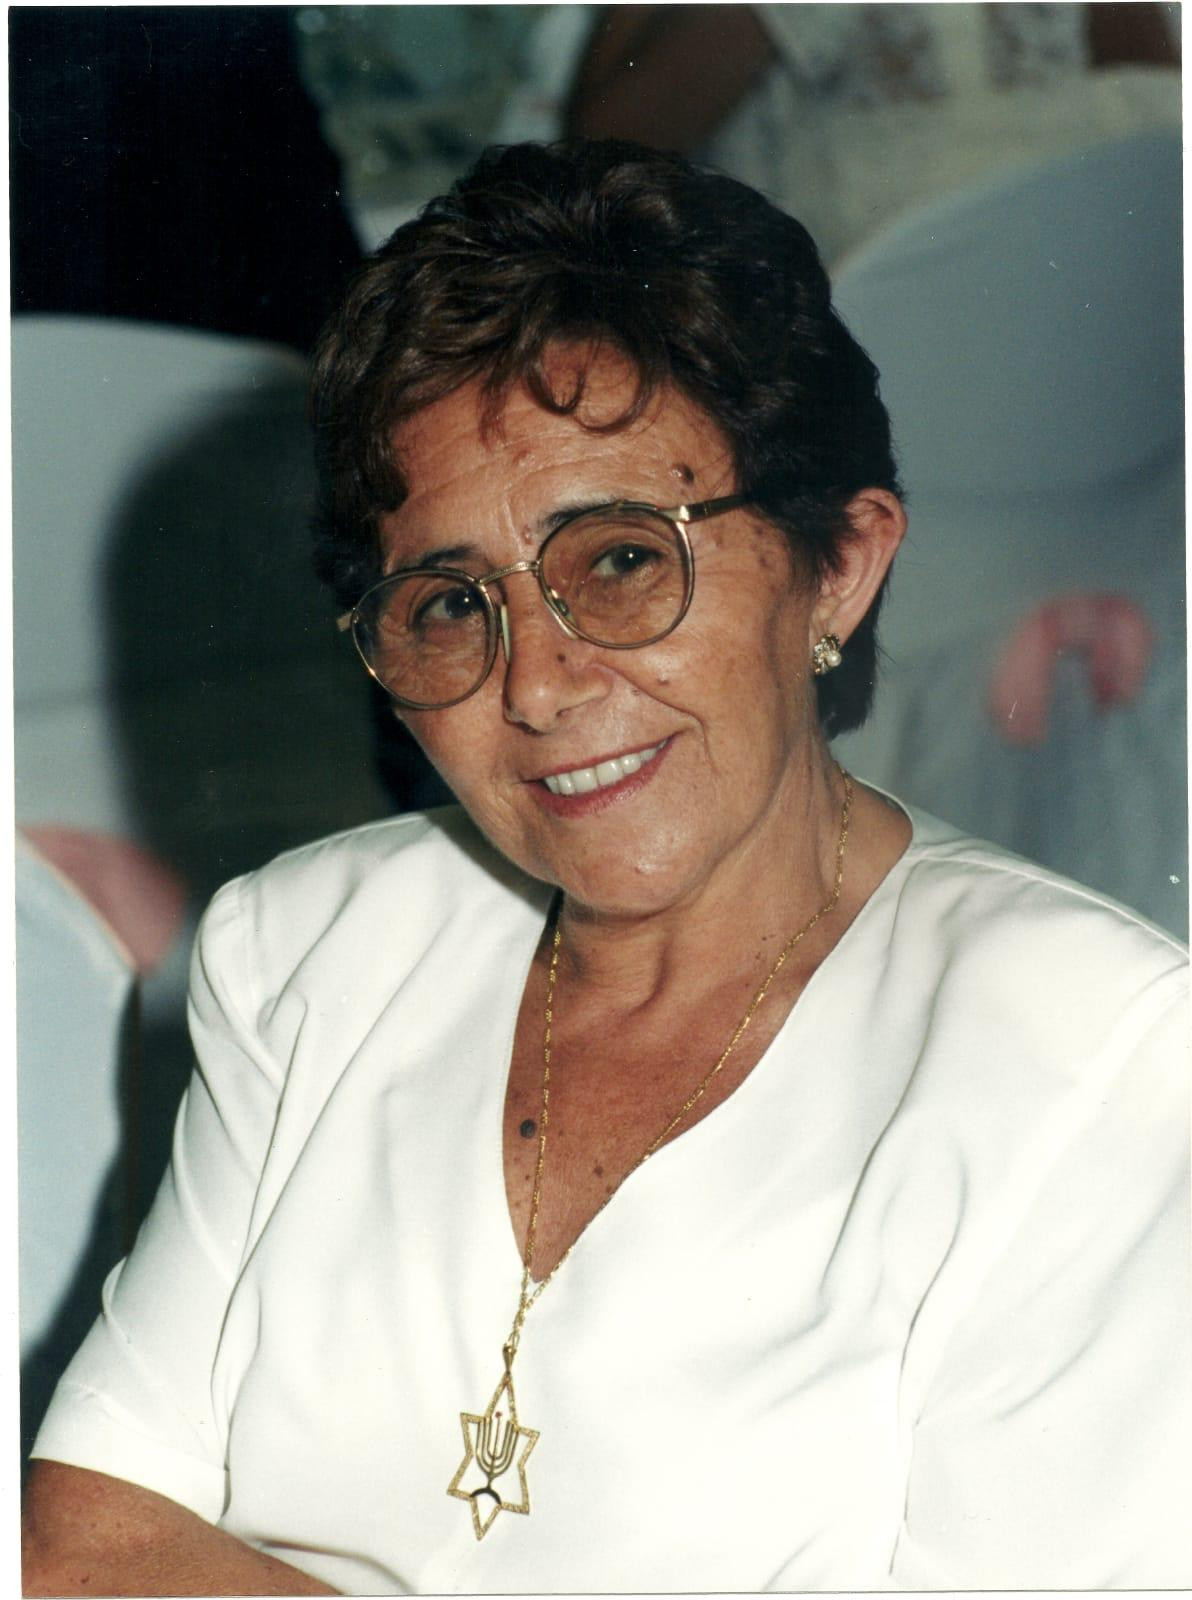 Marta Villanueva